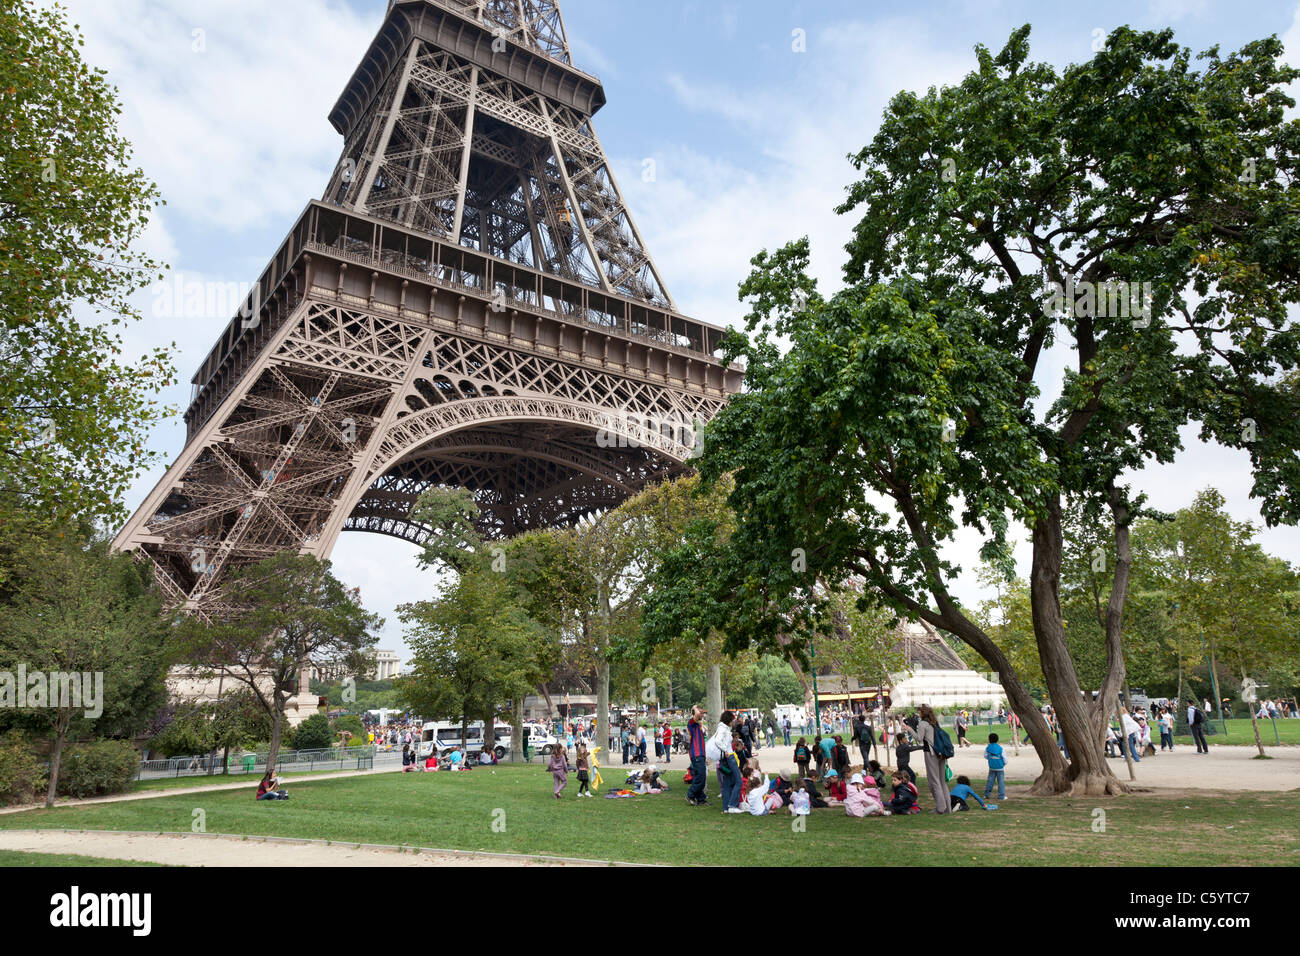 Eiffel tower Paris France Stock Photo